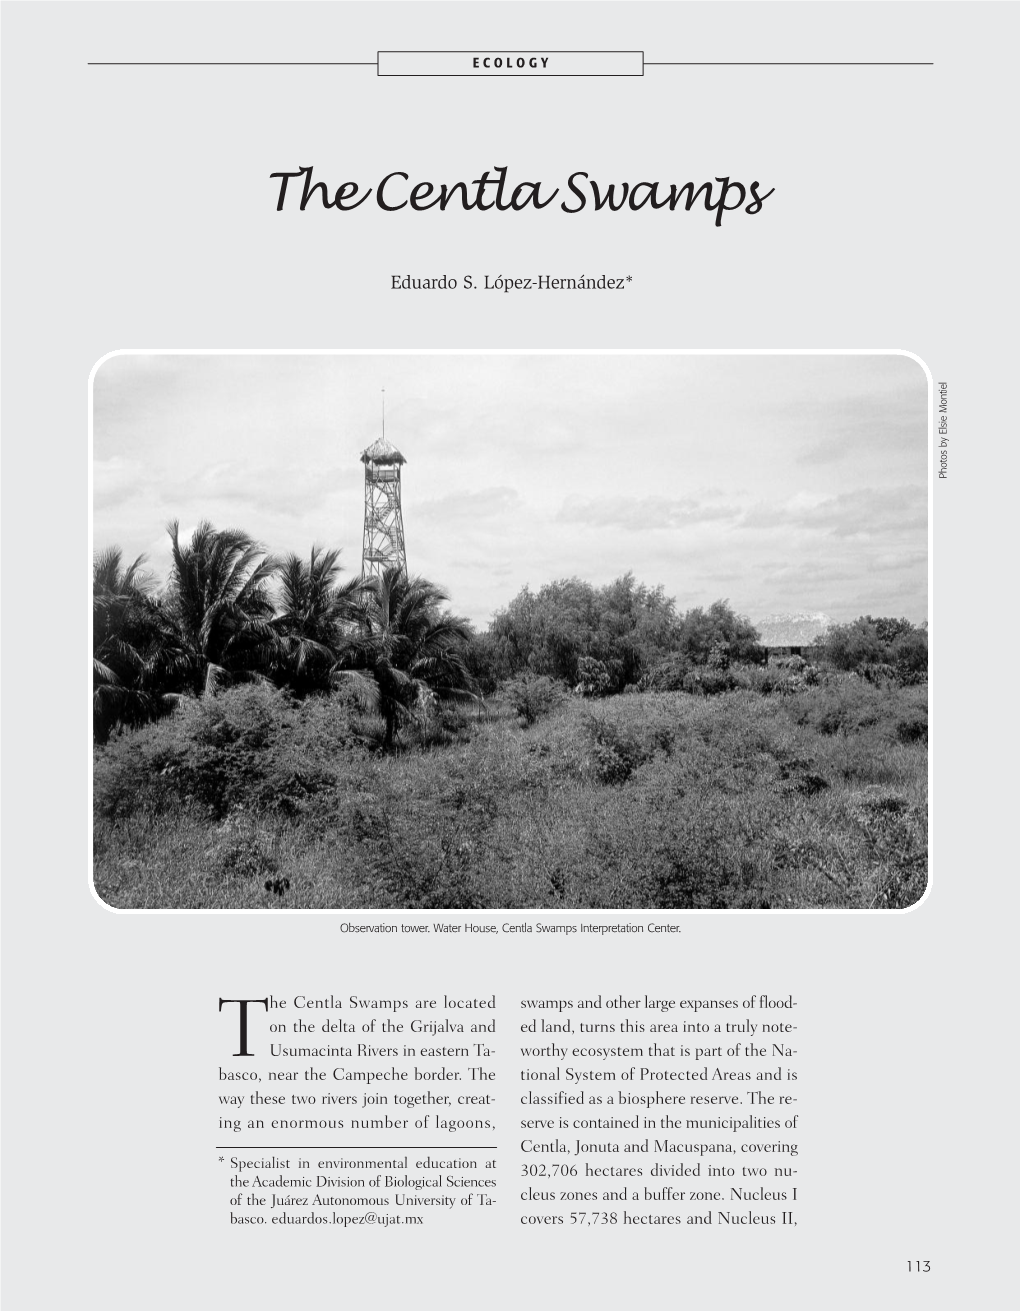 The Centla Swamps